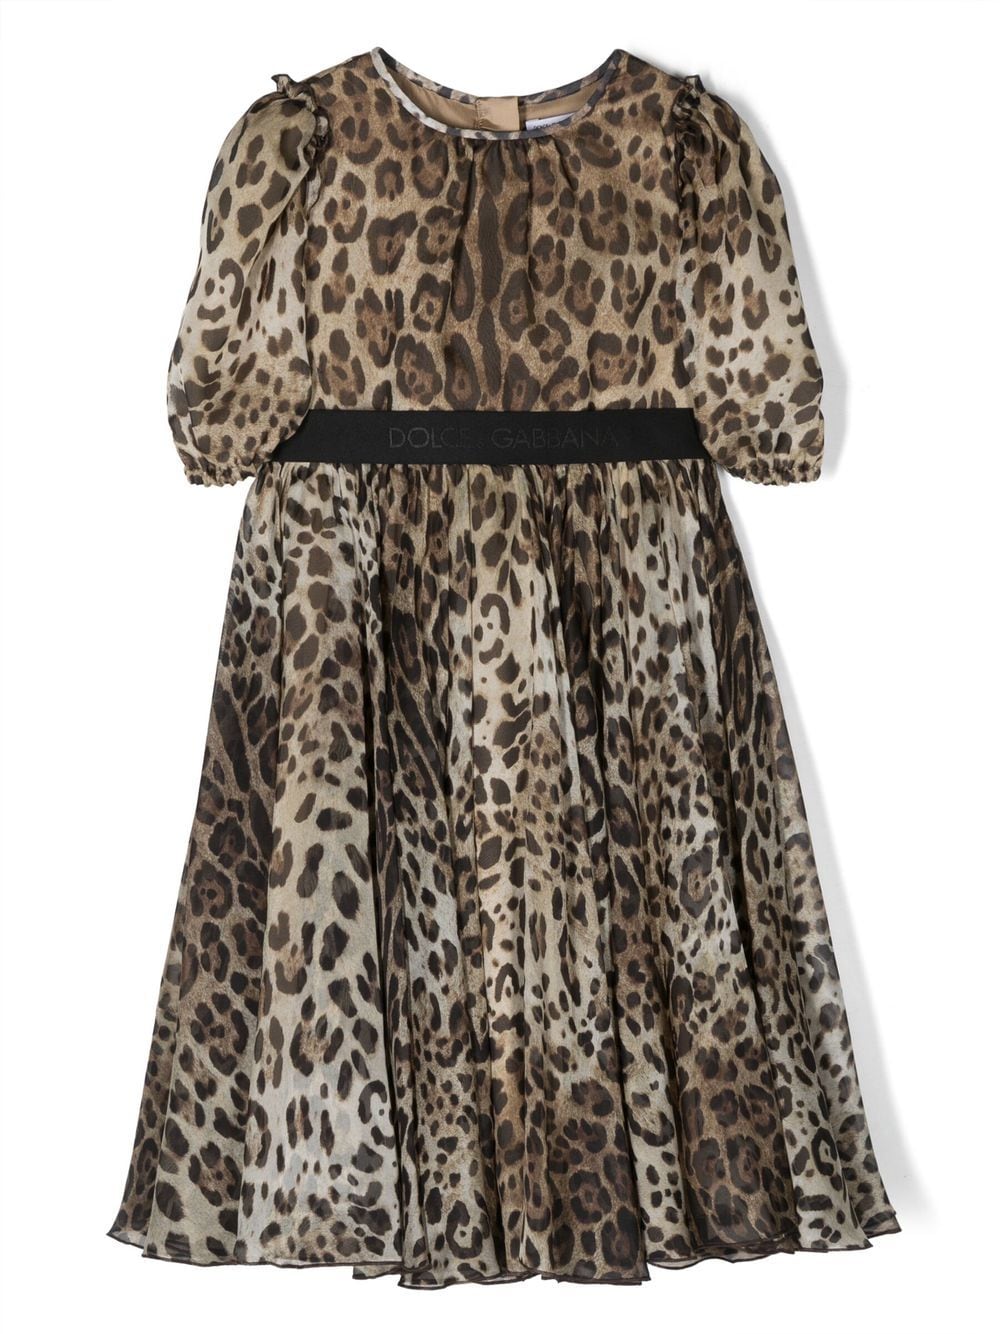 Dolce & Gabbana Kids' Leopard Dress In Brown